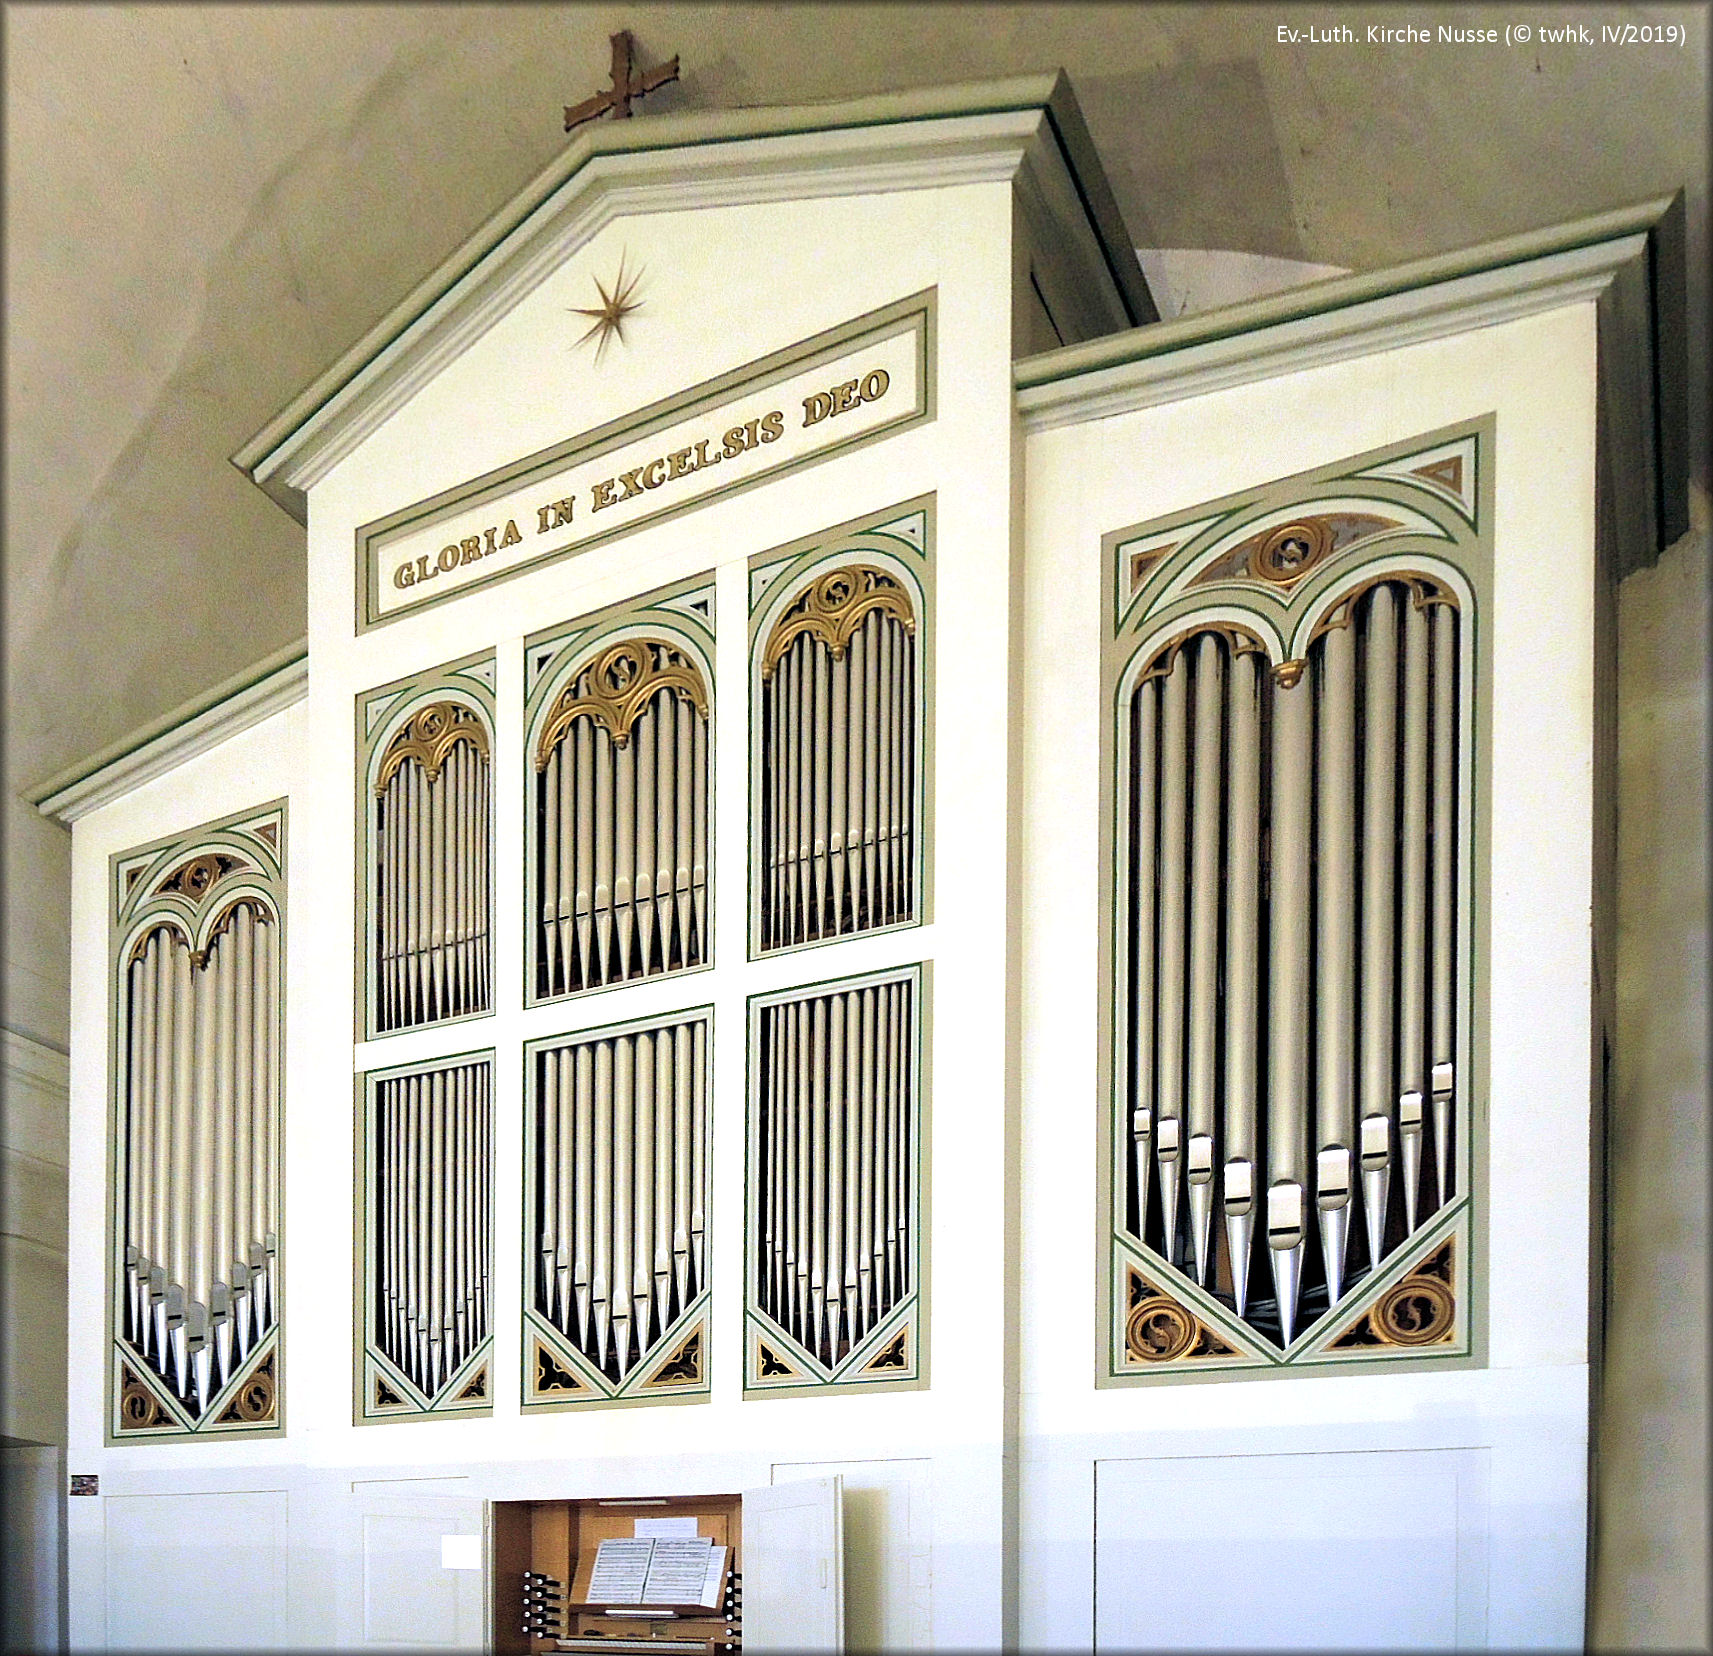 kirche nusse - 9037 - orgel.jpg